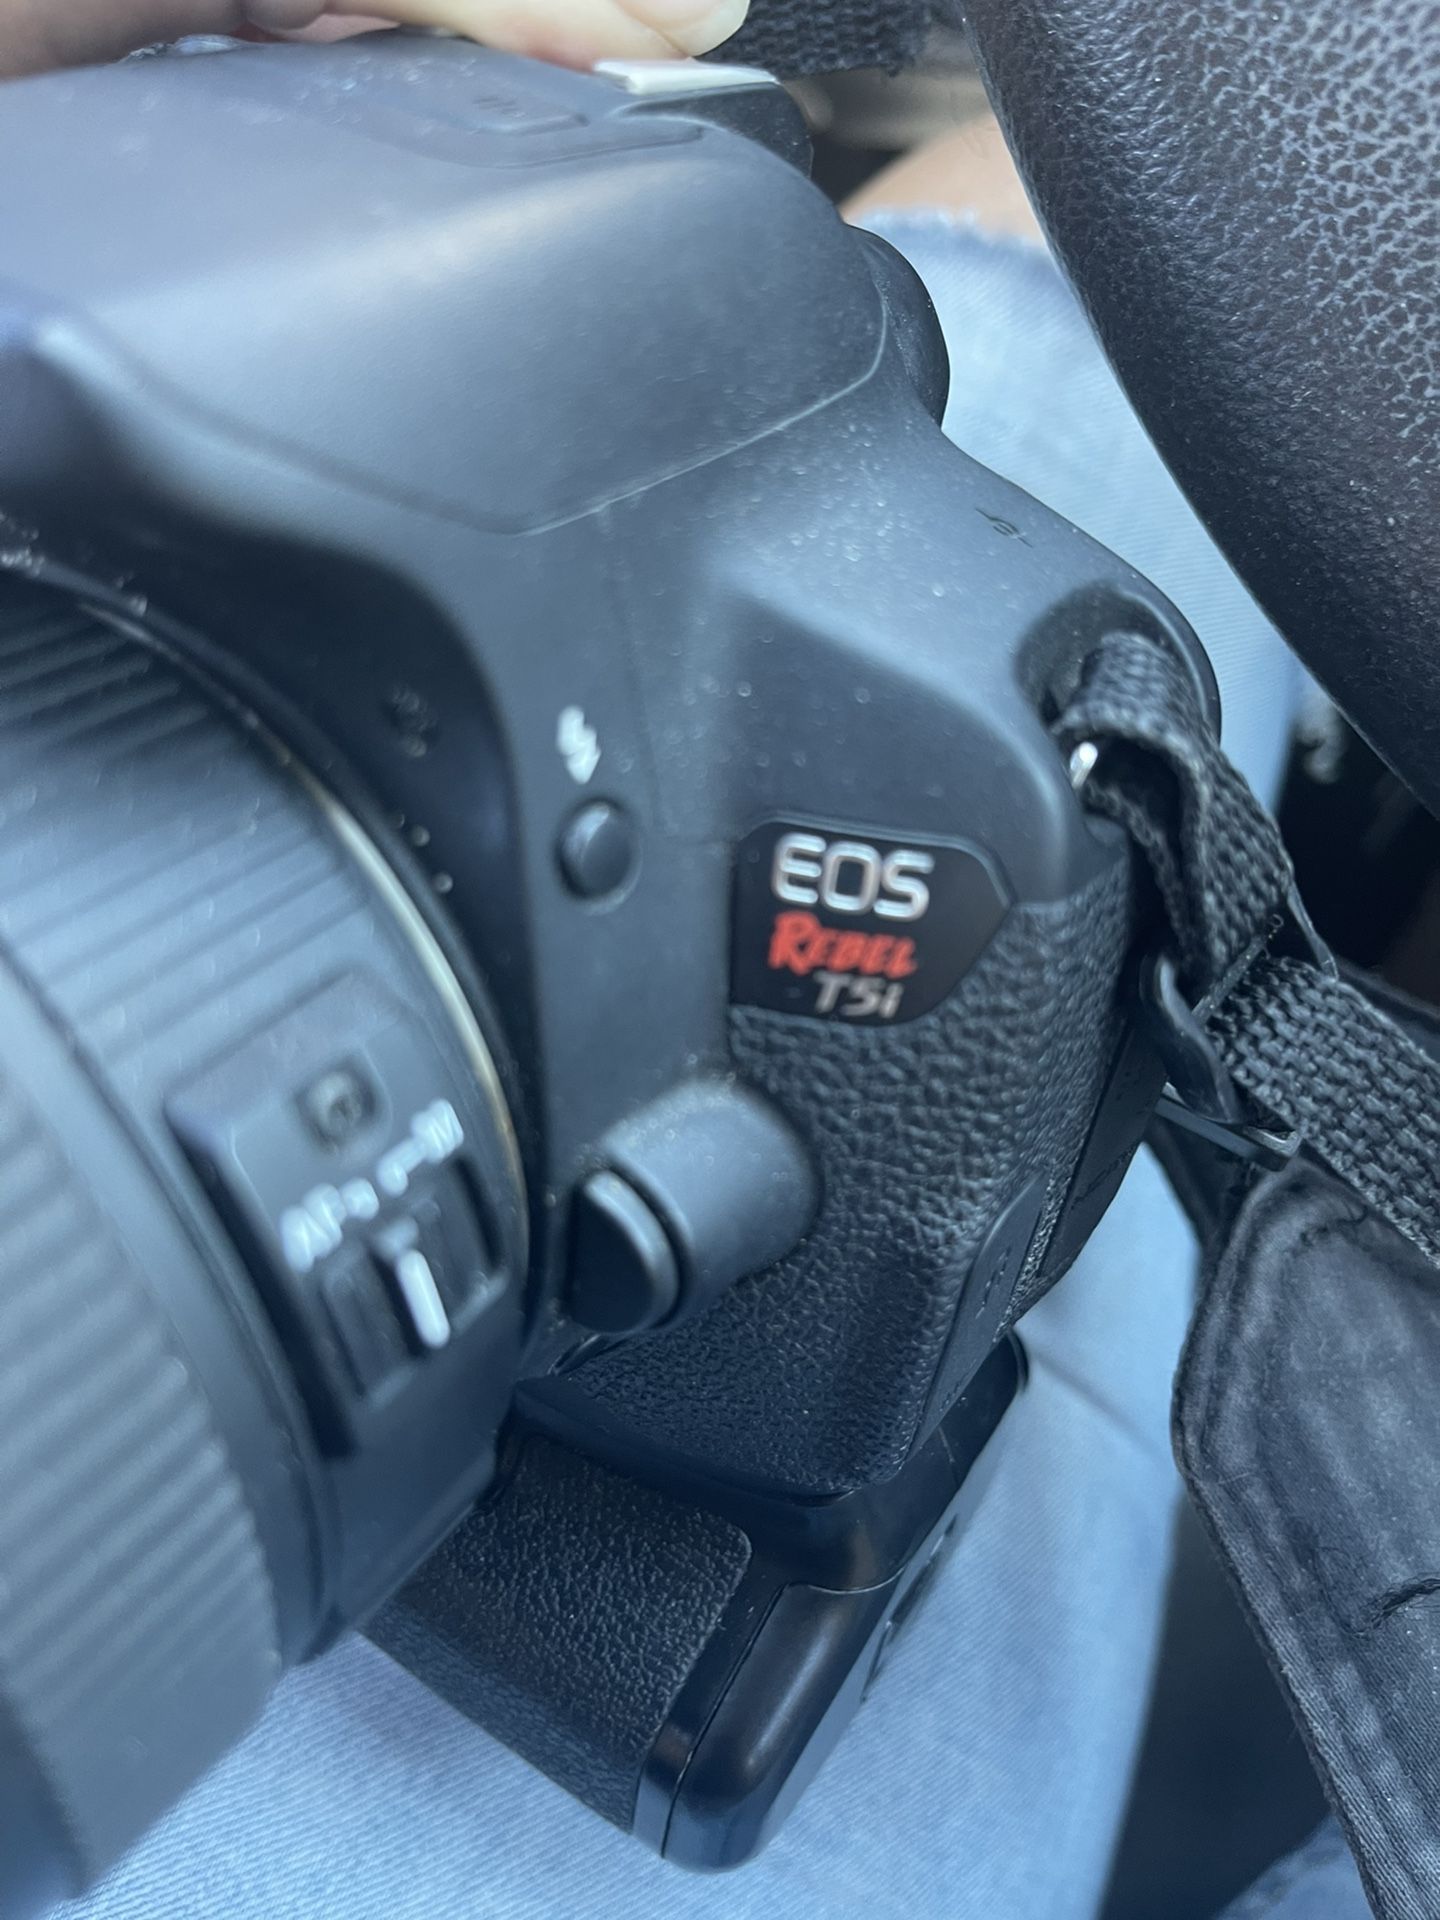 Eos Rebel T5i & Lens